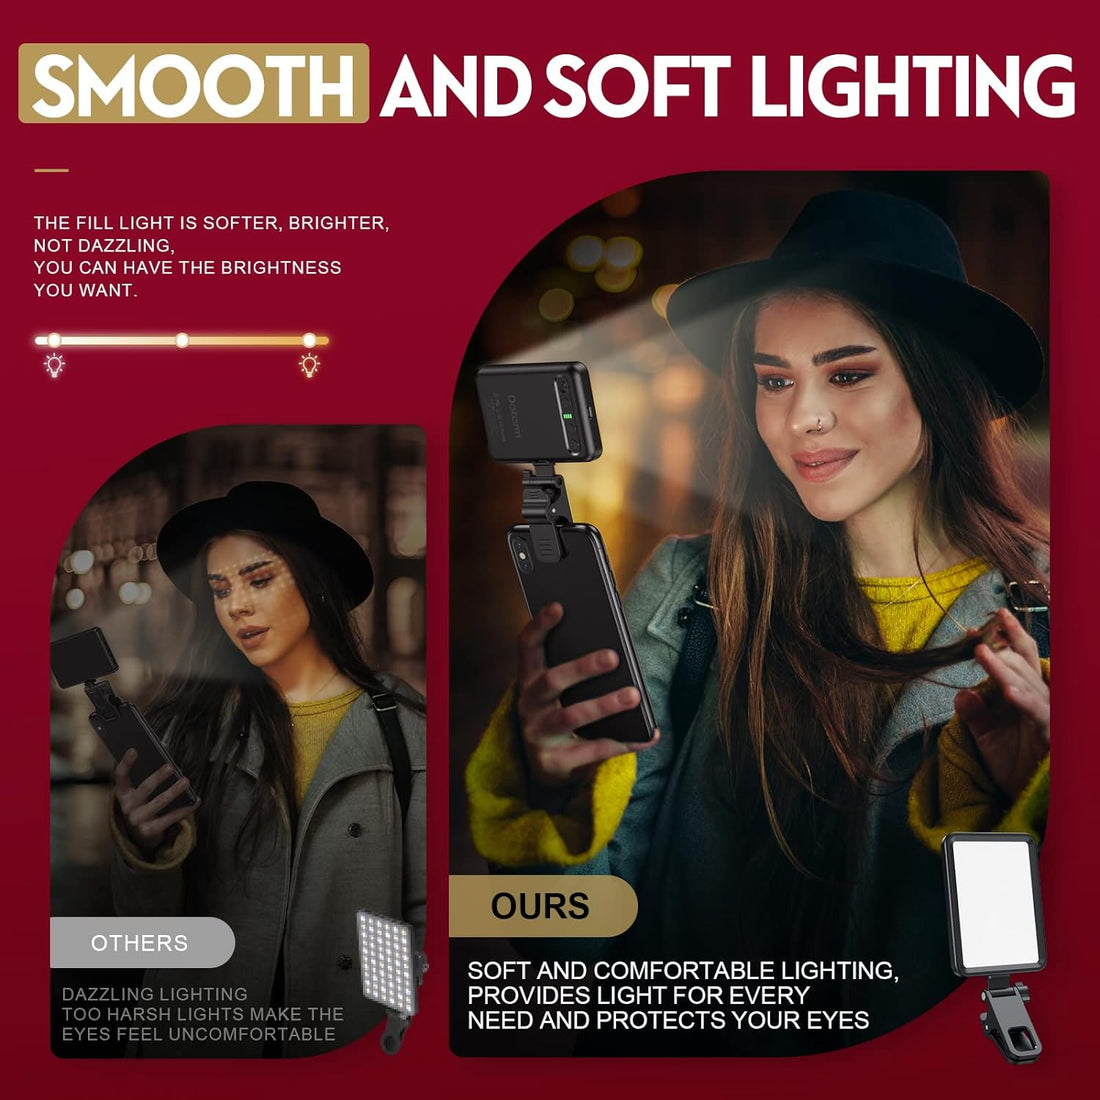 Datarm 60 LED Selfie Light,Clip Video Light for Phone, iPad, Laptop and Tablet, 3000mAh Rechargeable CRI 90+ Portable Phone Light Clip for Selfie,Video Conference,Vlog,TikTok